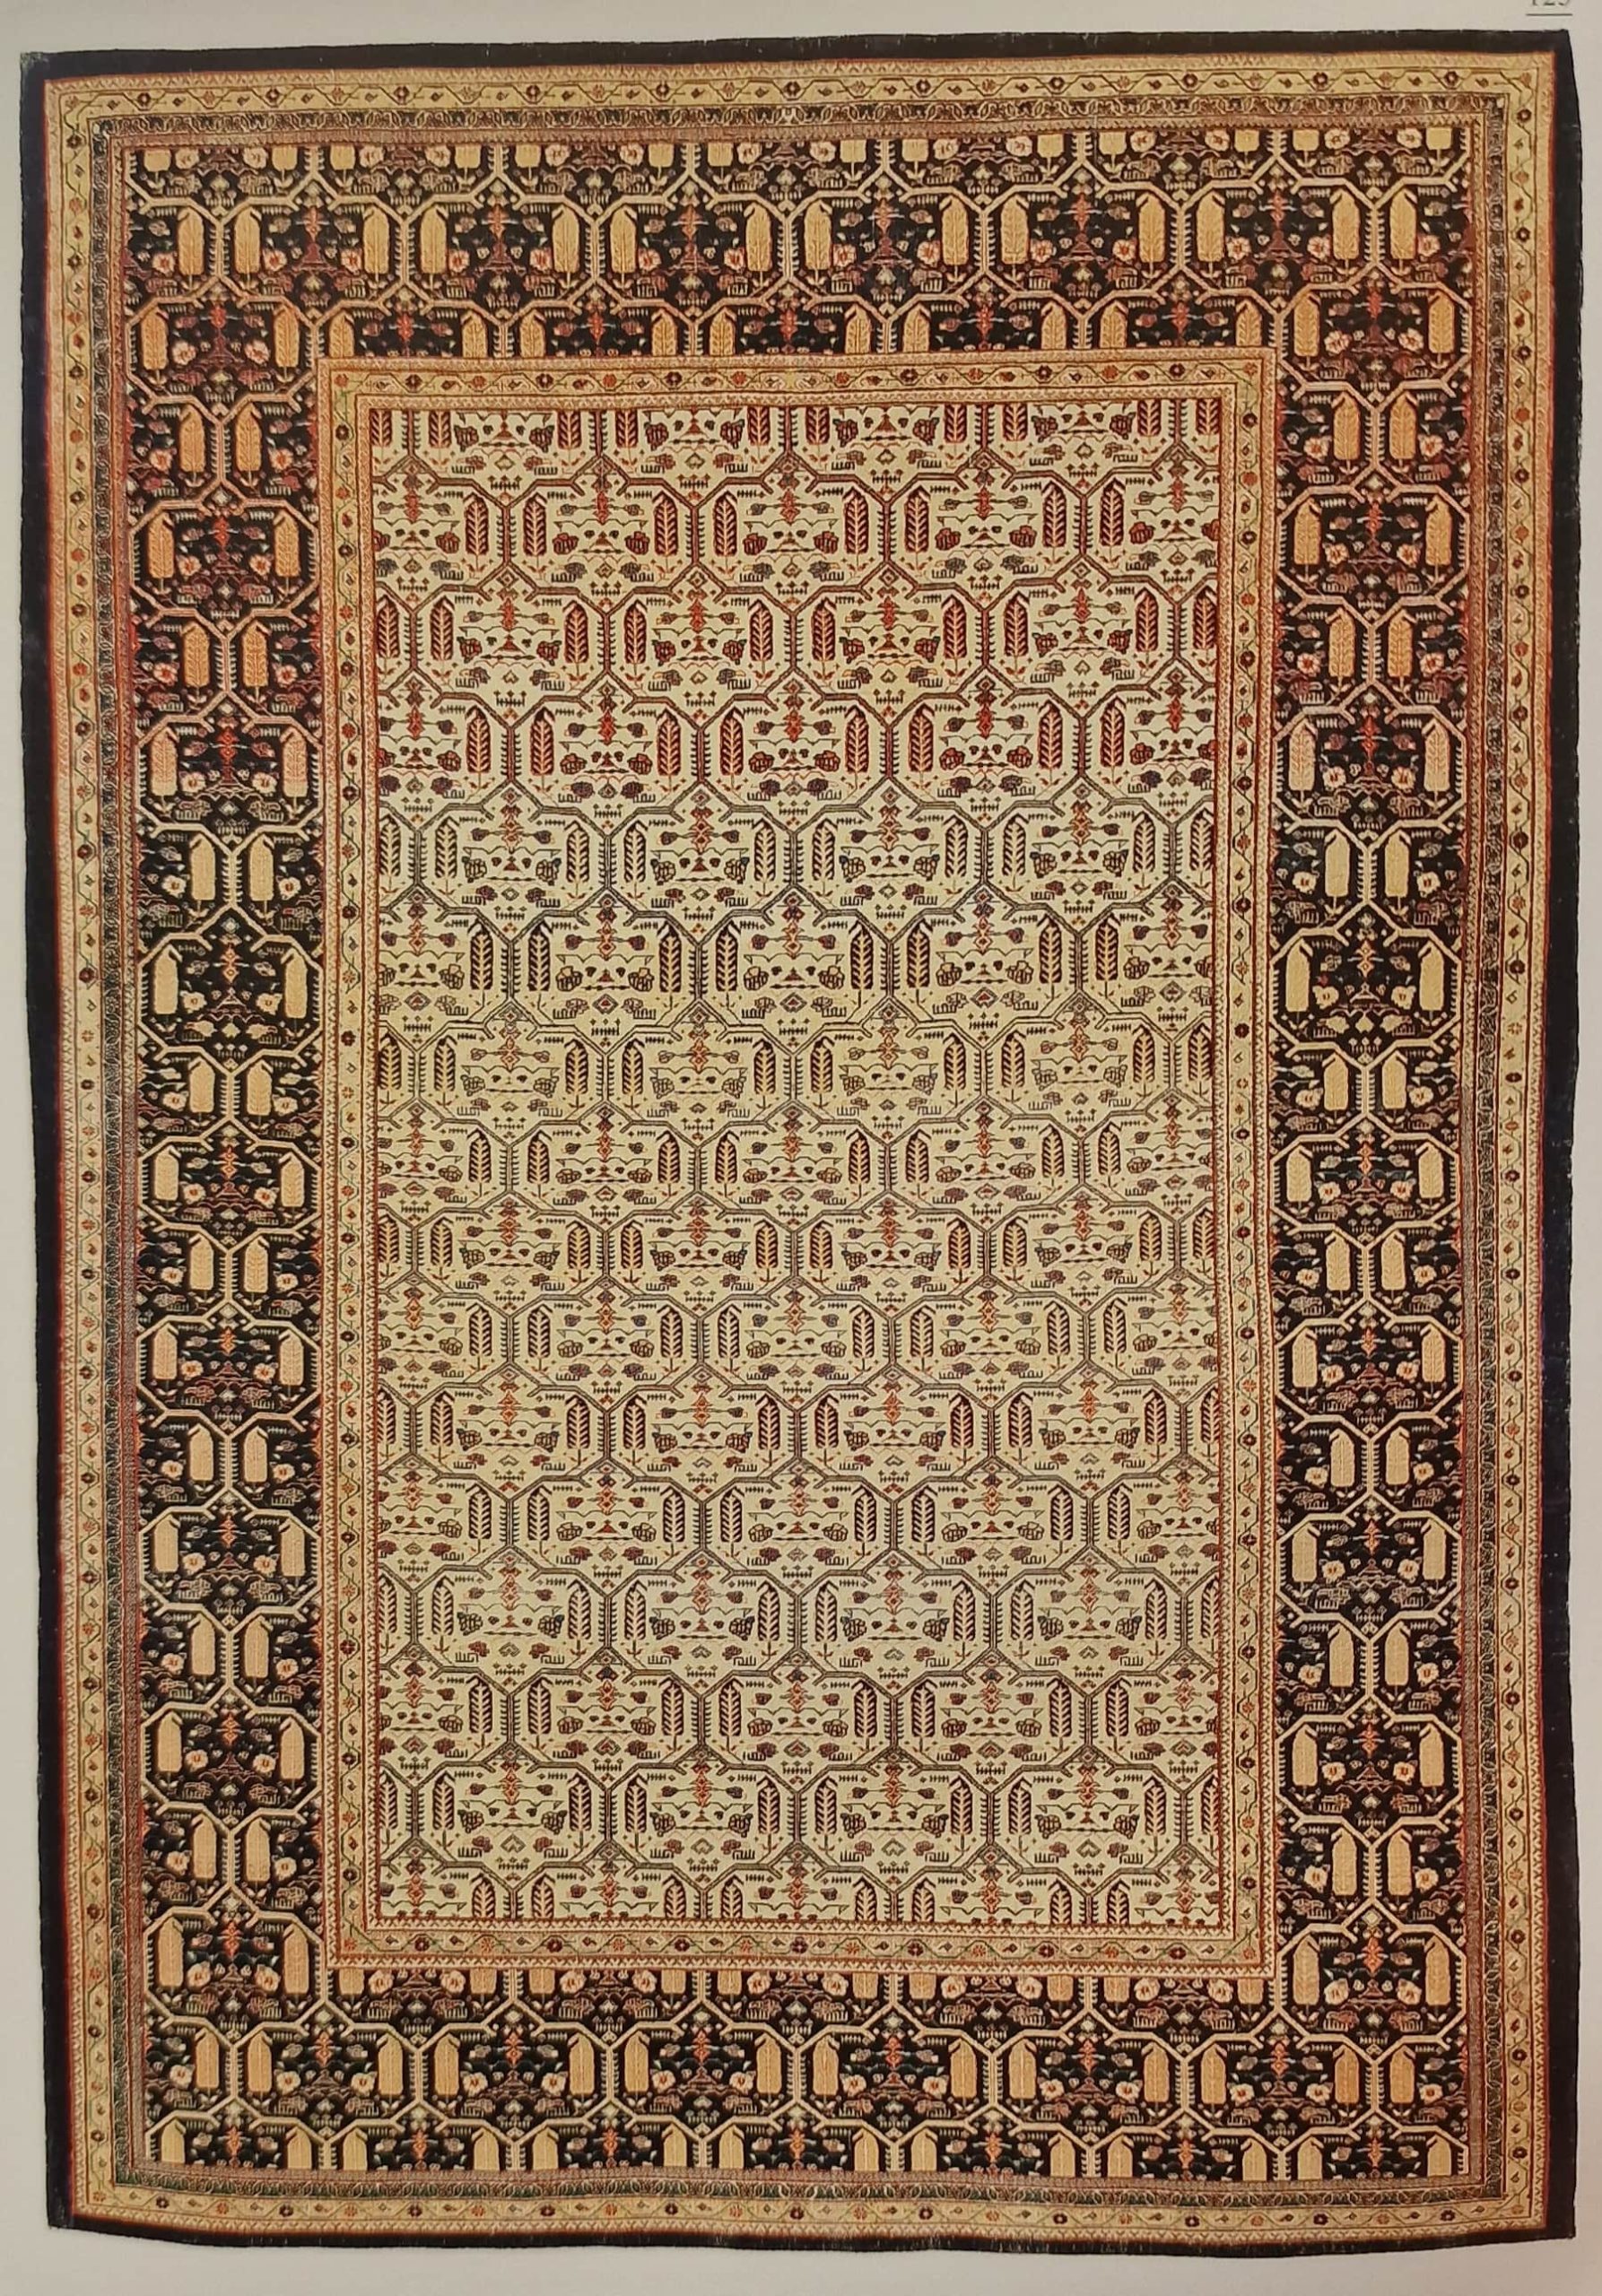 Iranian carpets